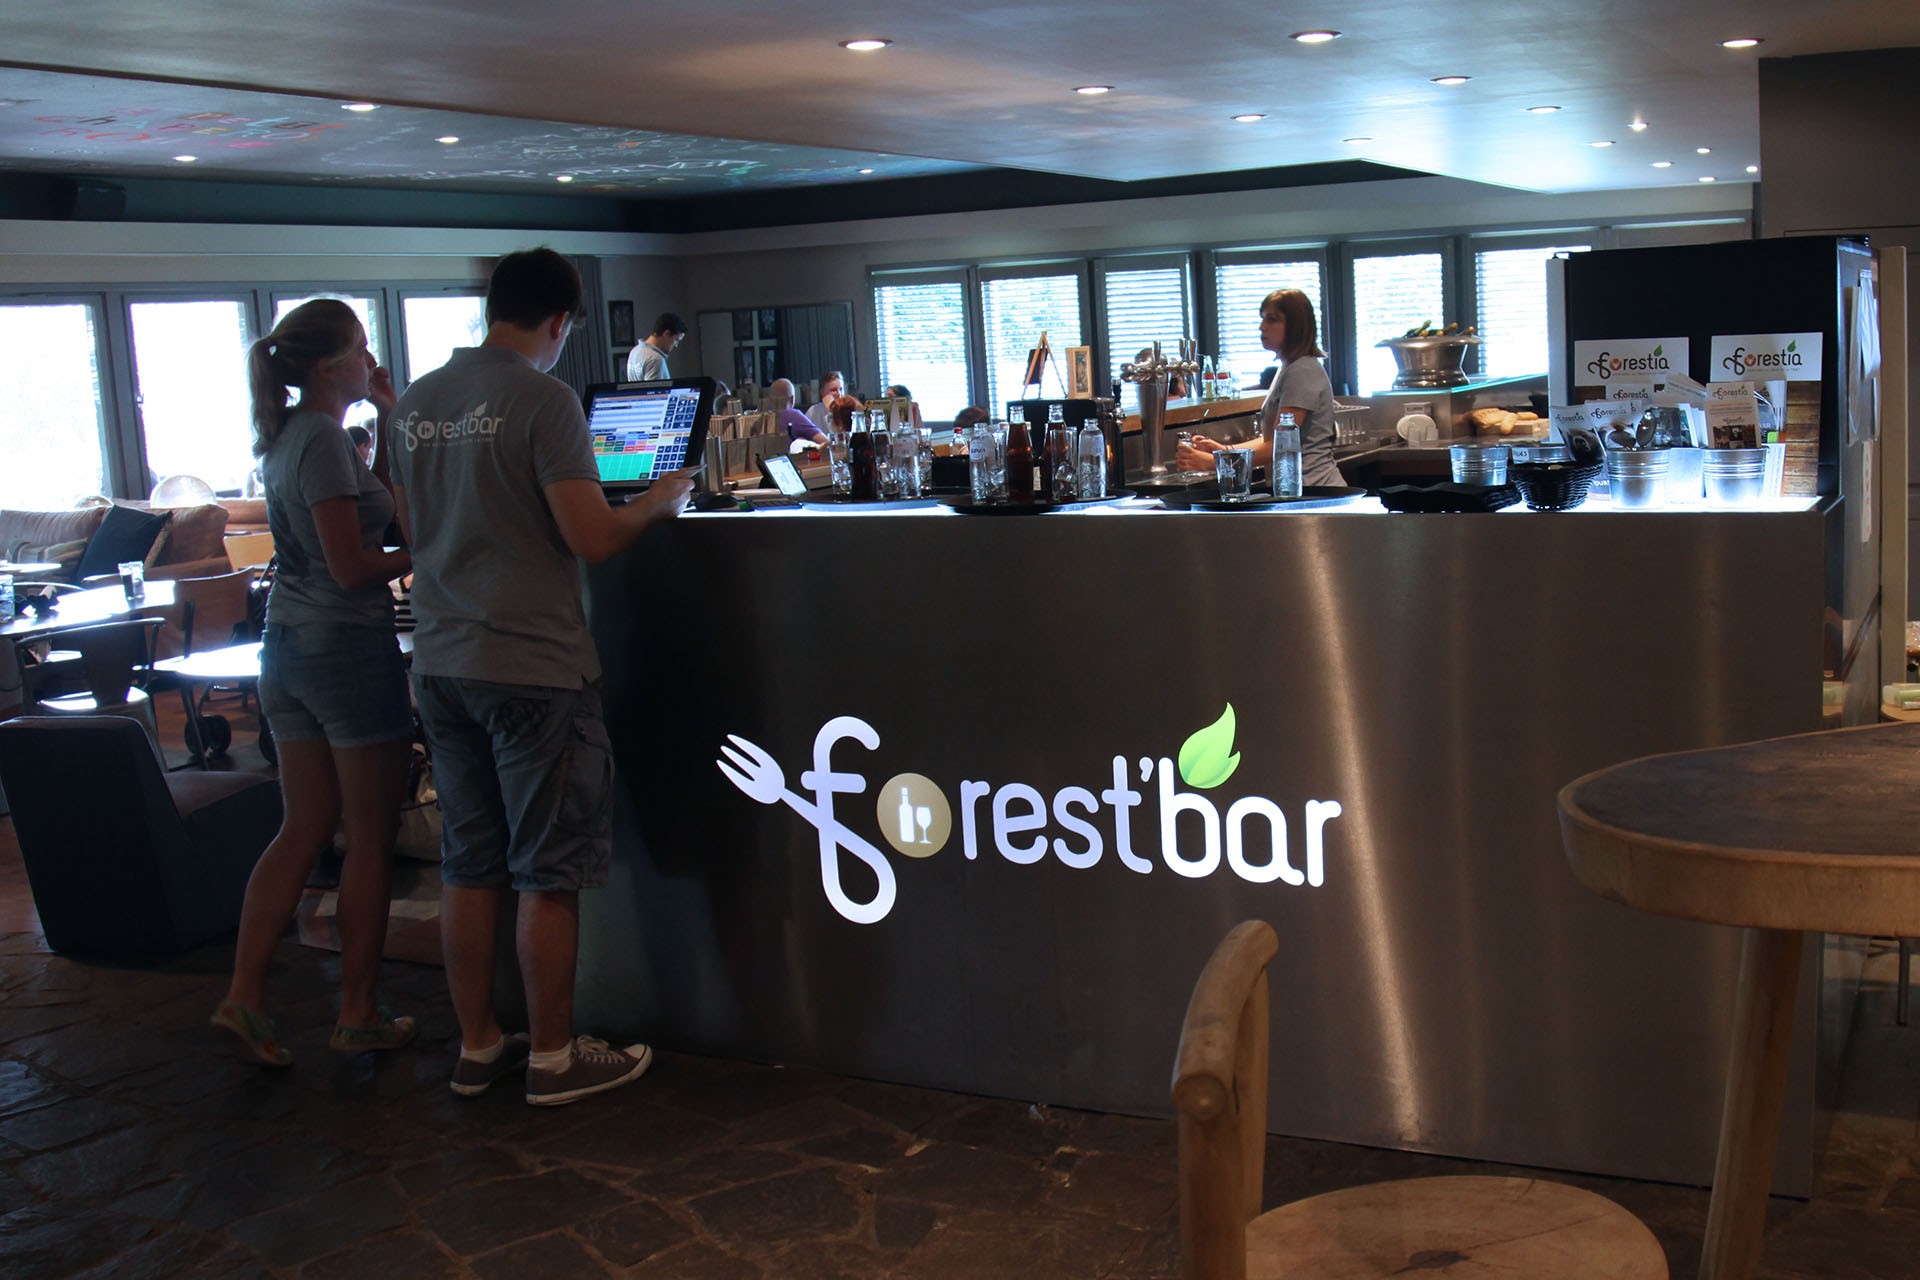 Forestia - Forest'bar